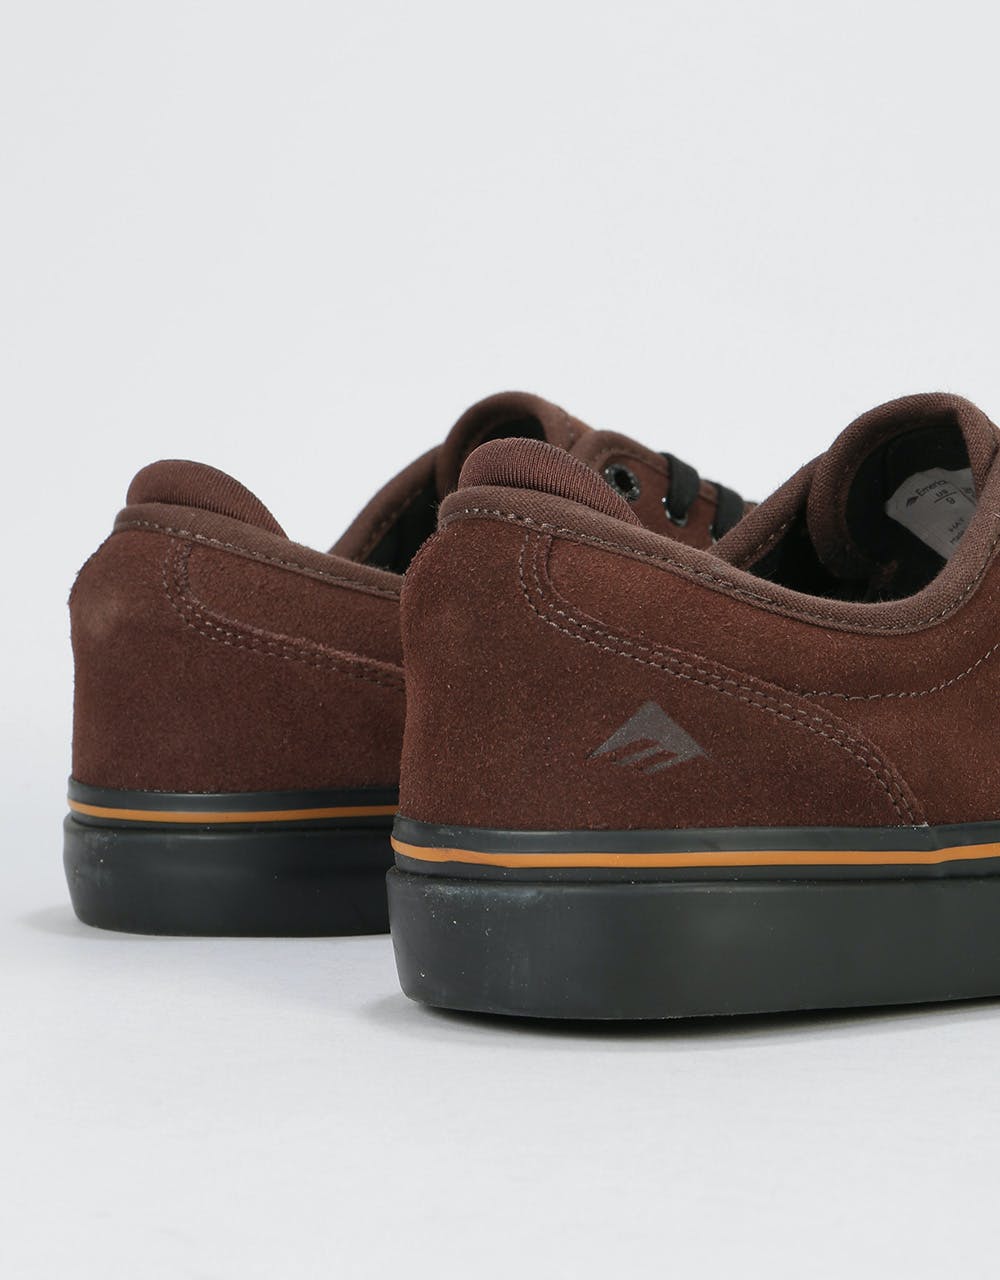 Emerica Wino G6 Skate Shoes - Brown/Black/Tan